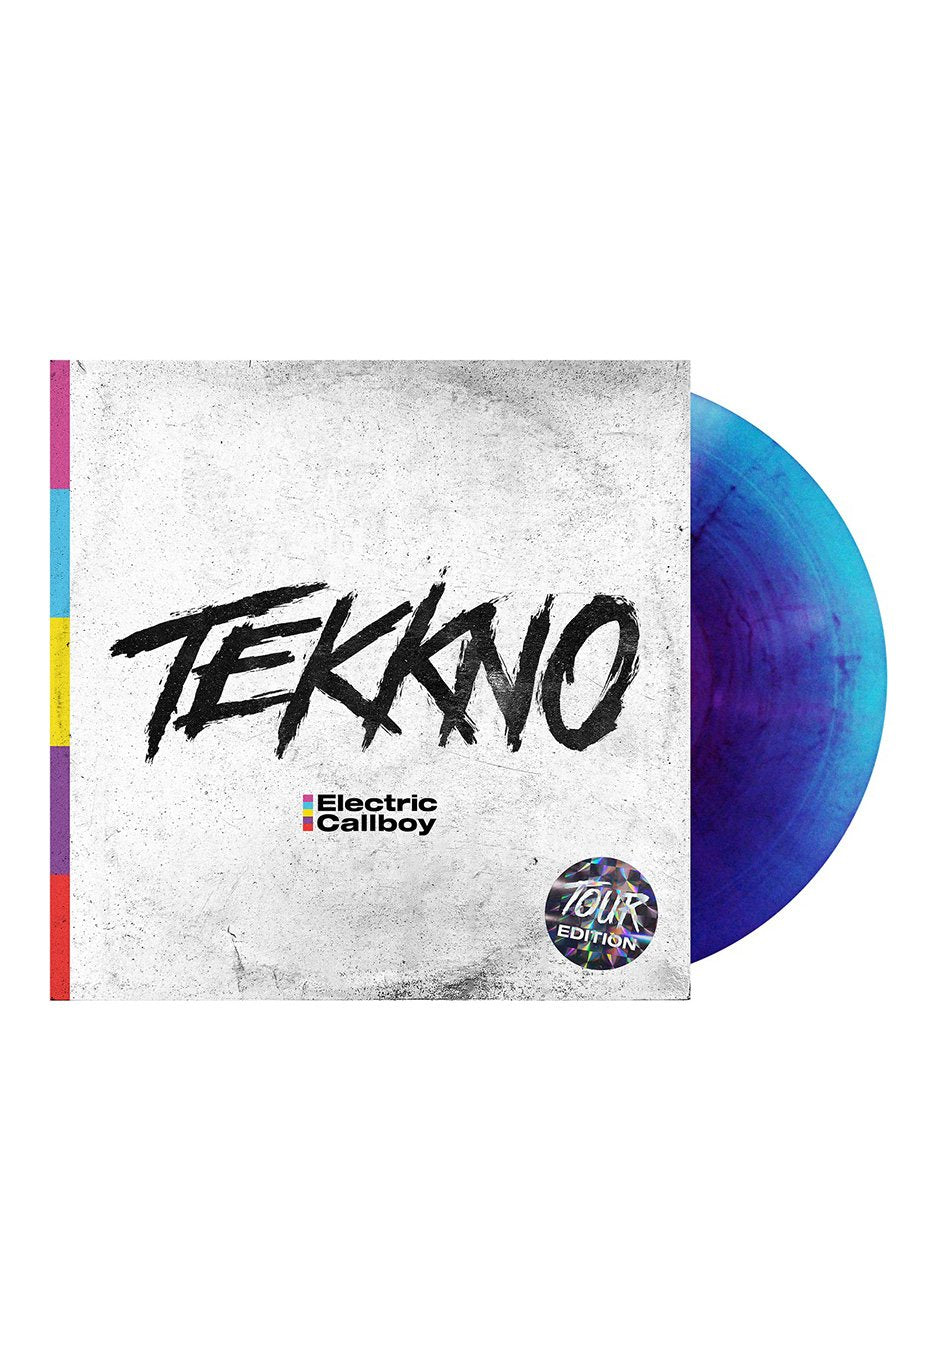 Electric Callboy - TEKKNO (Tour Edition) Ltd. Transparent Light Blue/Lilac - Marbled Vinyl